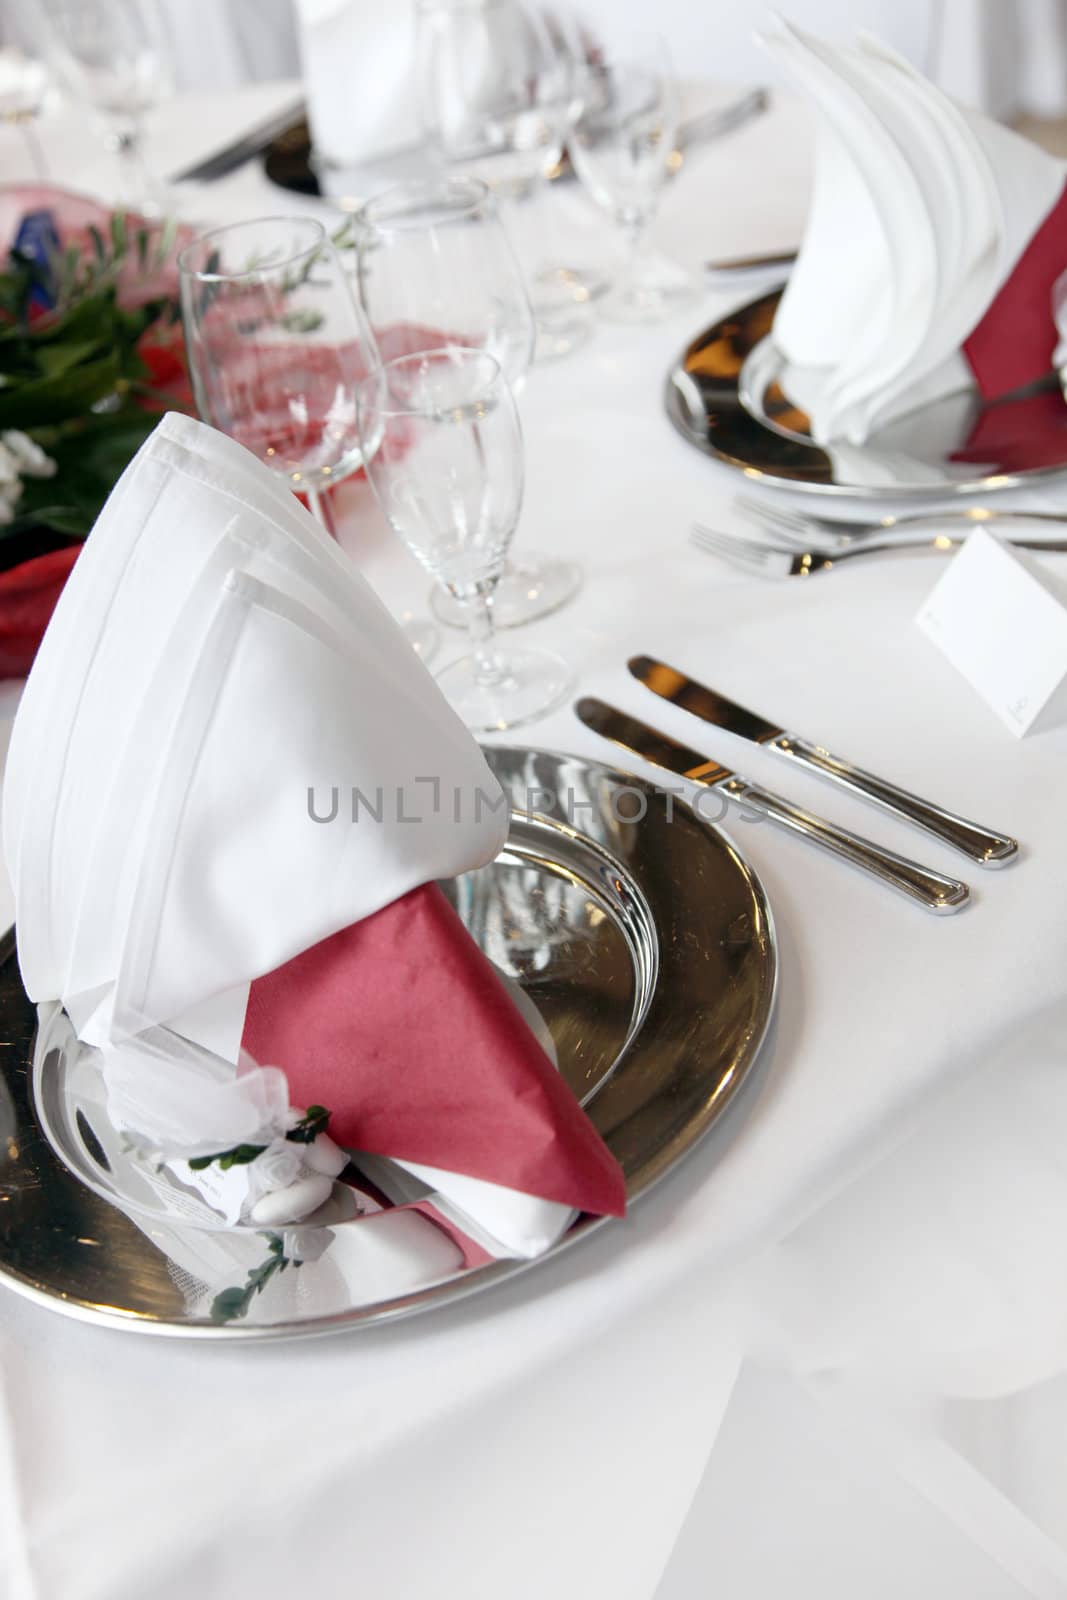 Elegant formal table setting by Farina6000